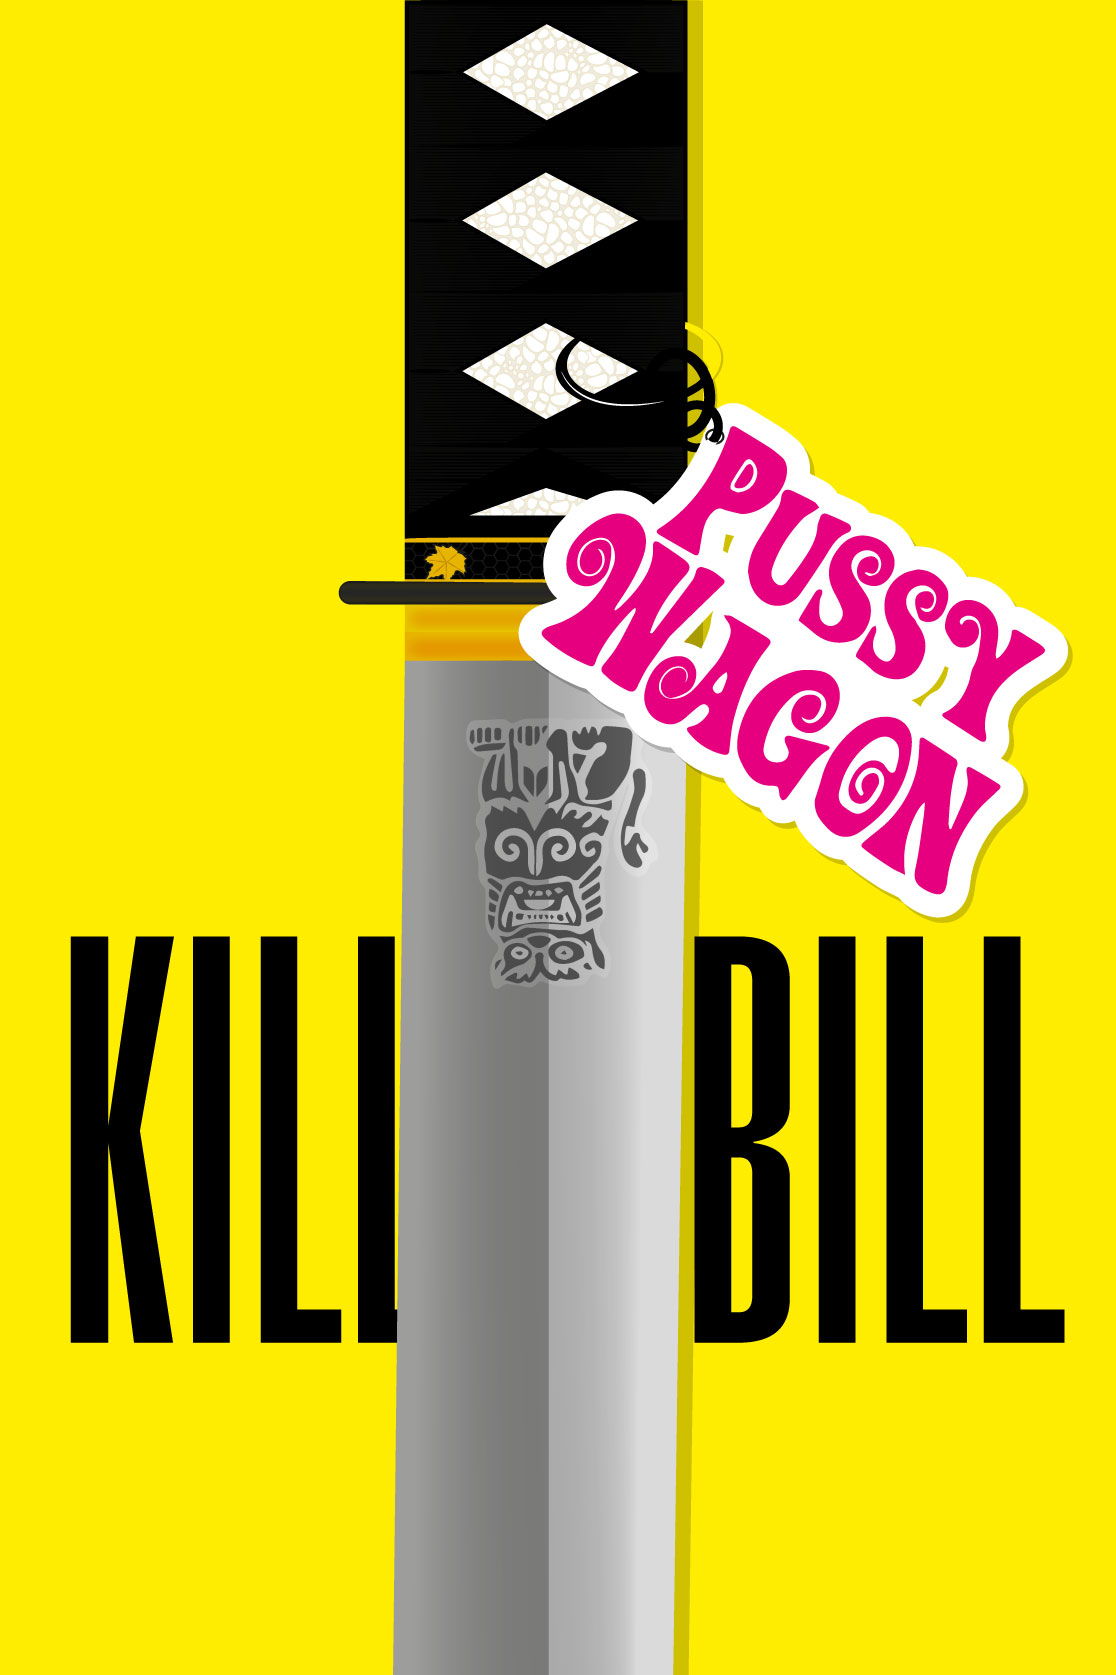 Kill Bill una peli al dia unapelialdia 1pelialdia